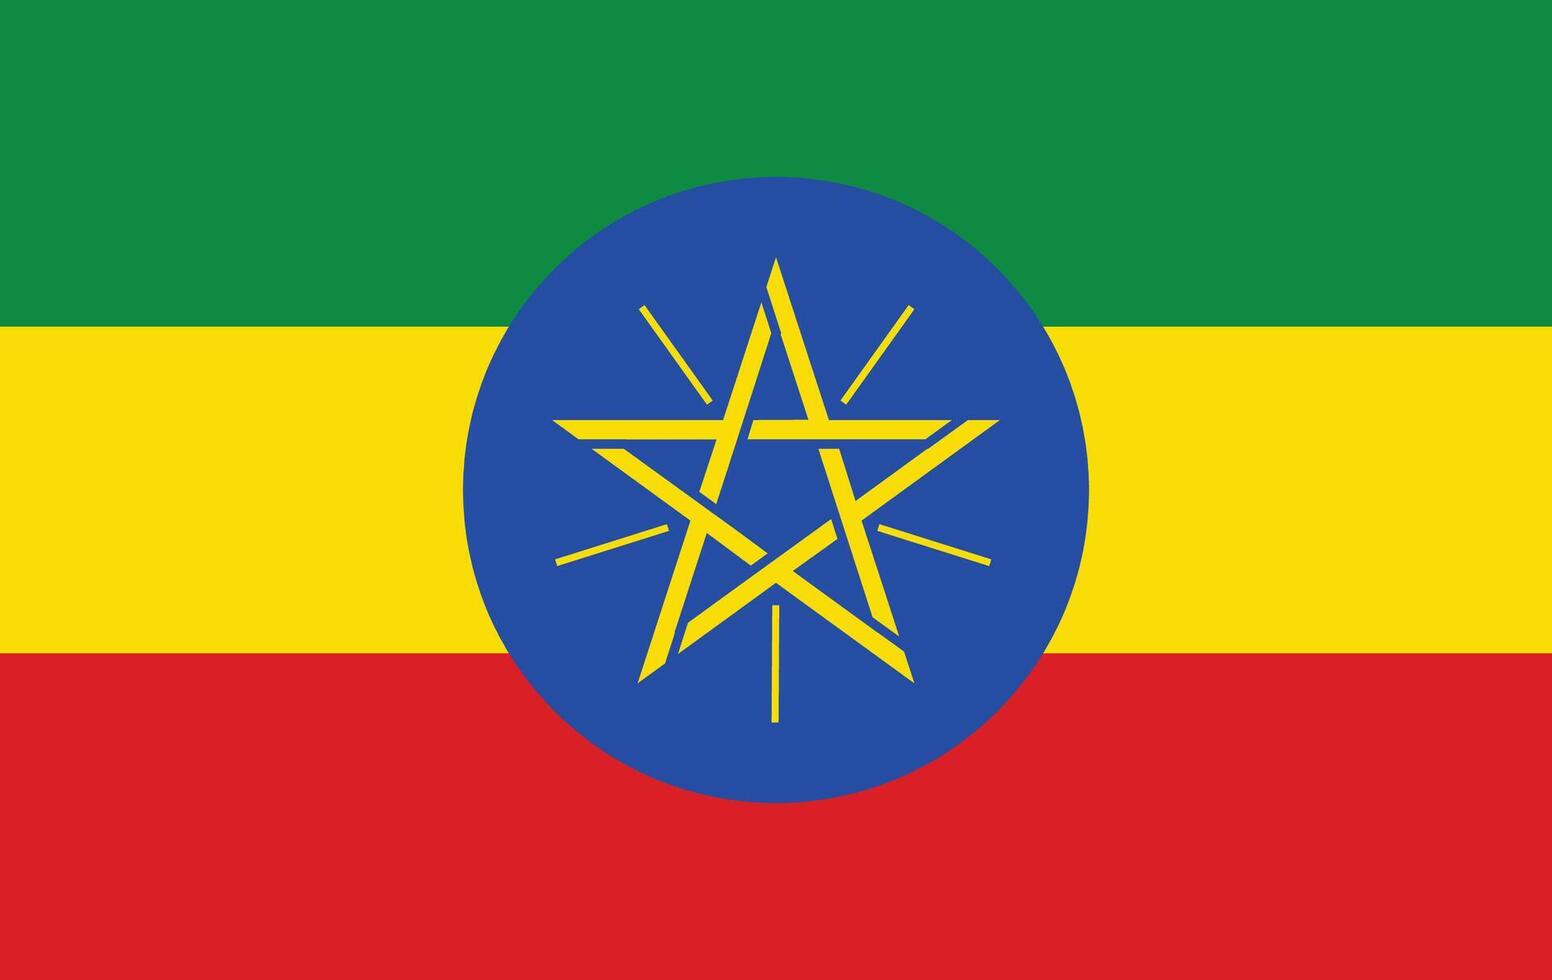 Image of Ethiopia Flag. Ethiopia Flag. National Flag of Ethiopia. Ethiopia flag illustration. Ethiopia flag picture. Ethiopia flag image vector